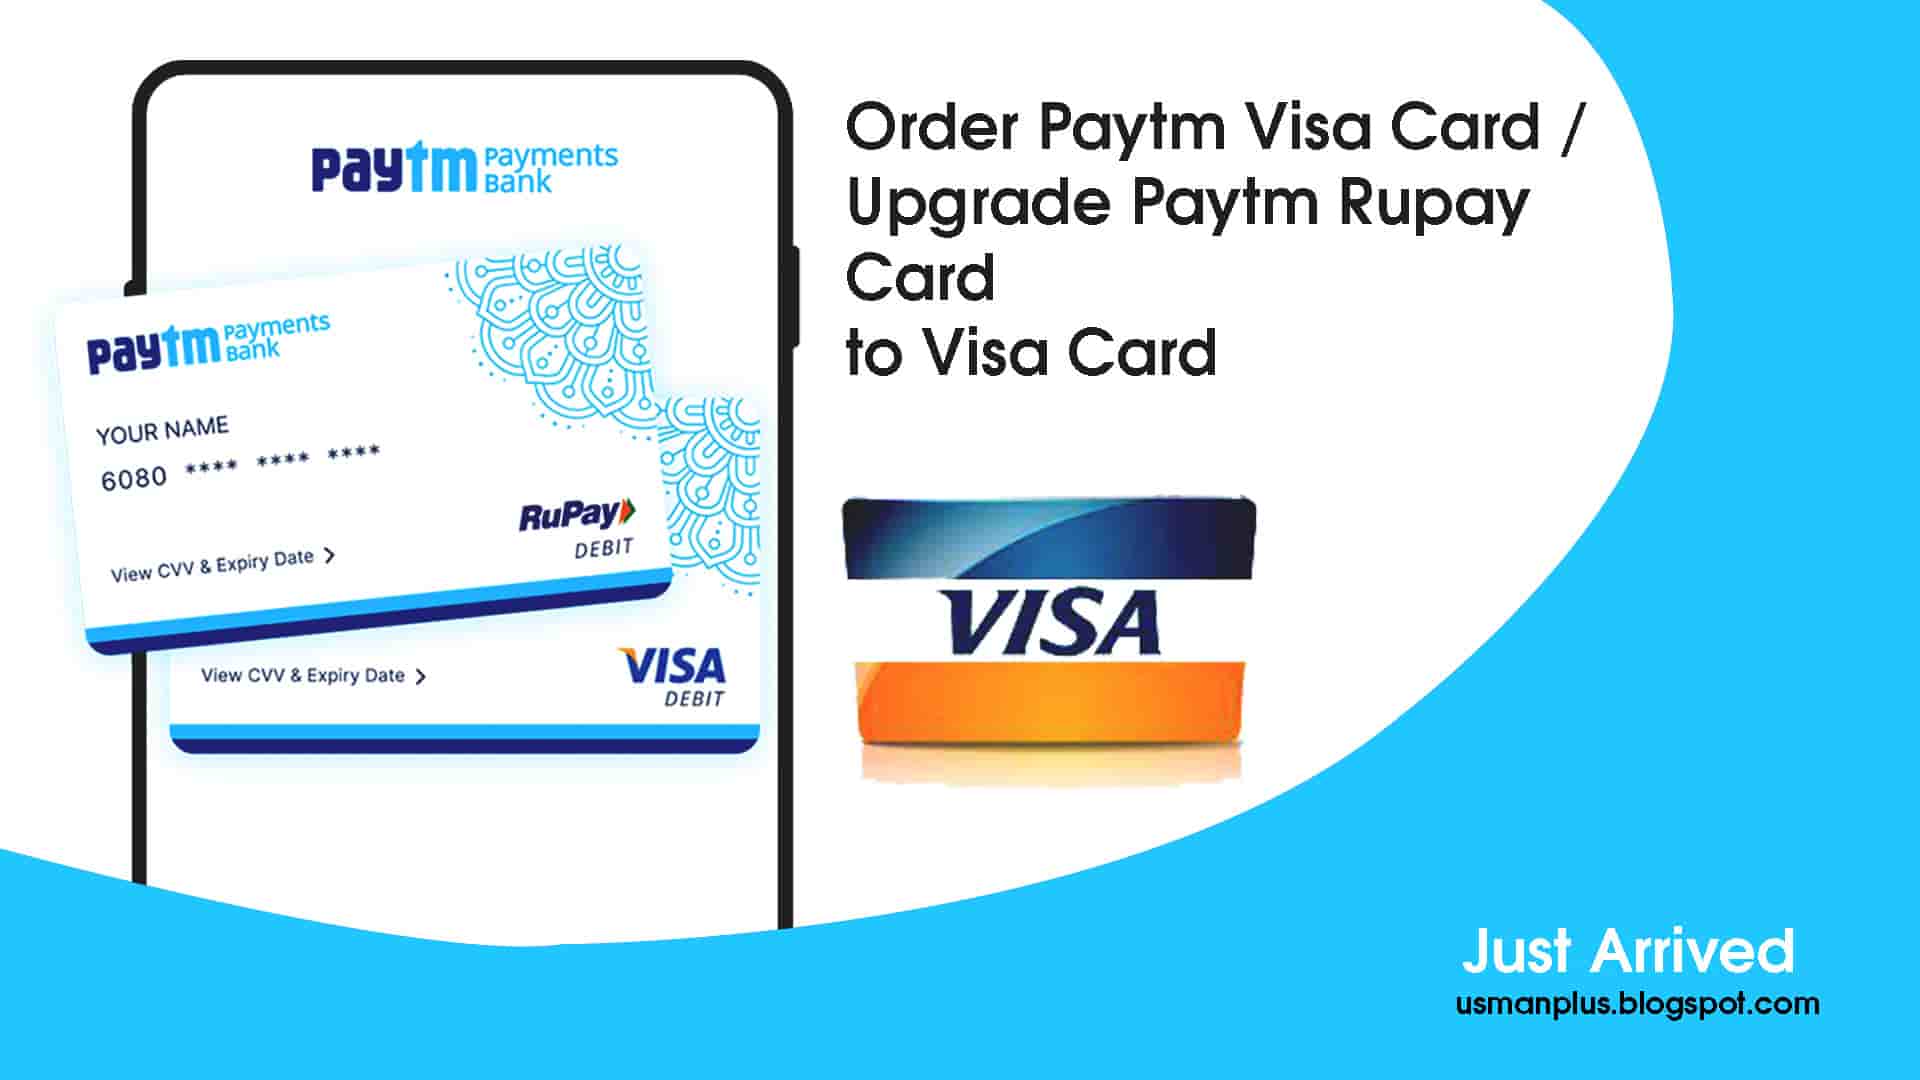 paytm visa debit card